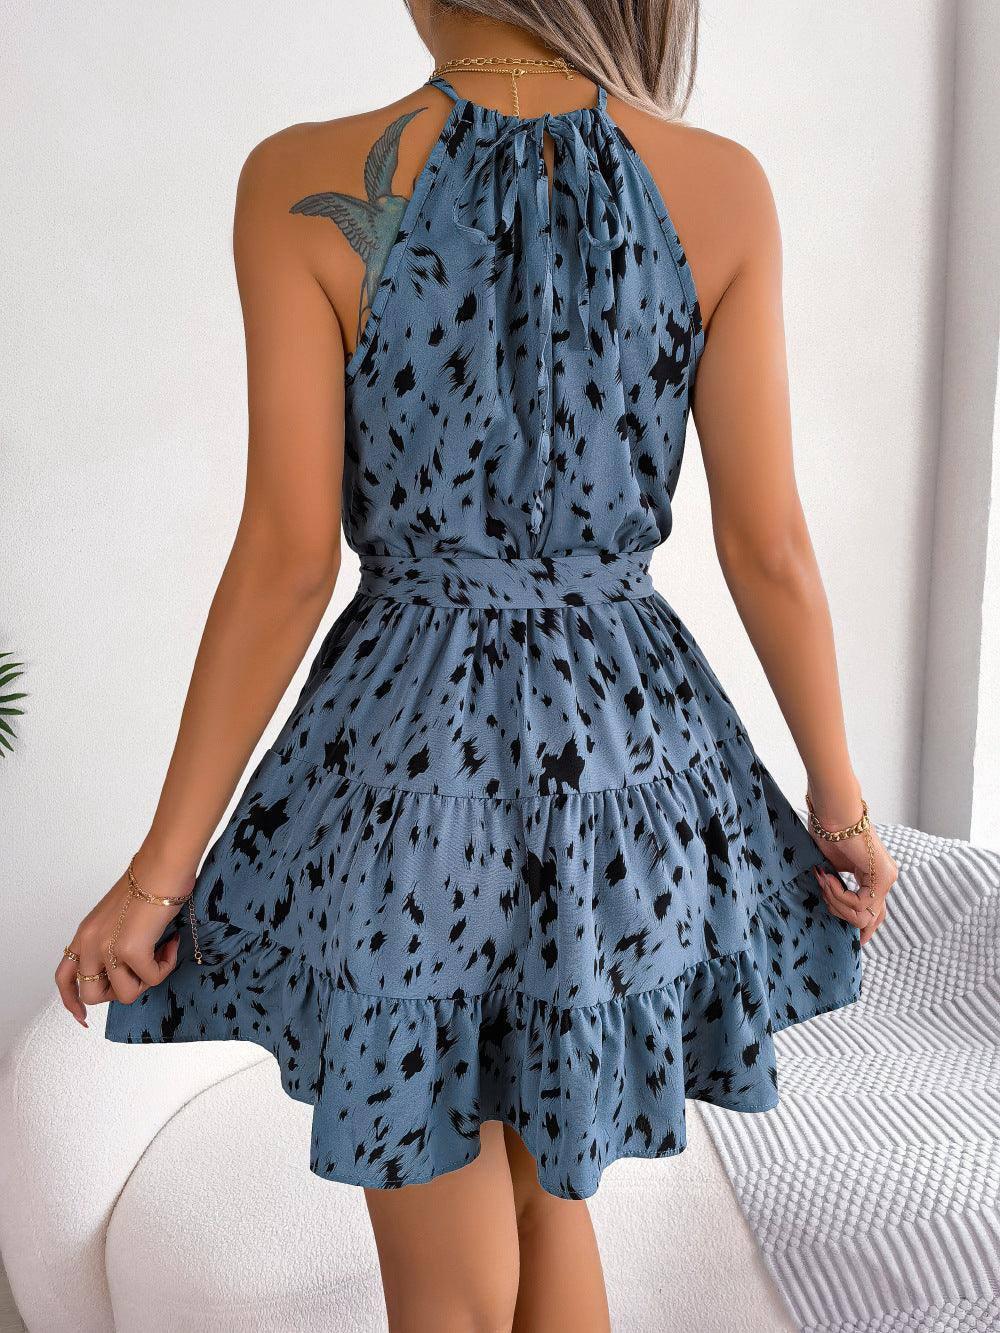 Casual Leopard Print Ruffled Swing Dress Summer Fashion-6